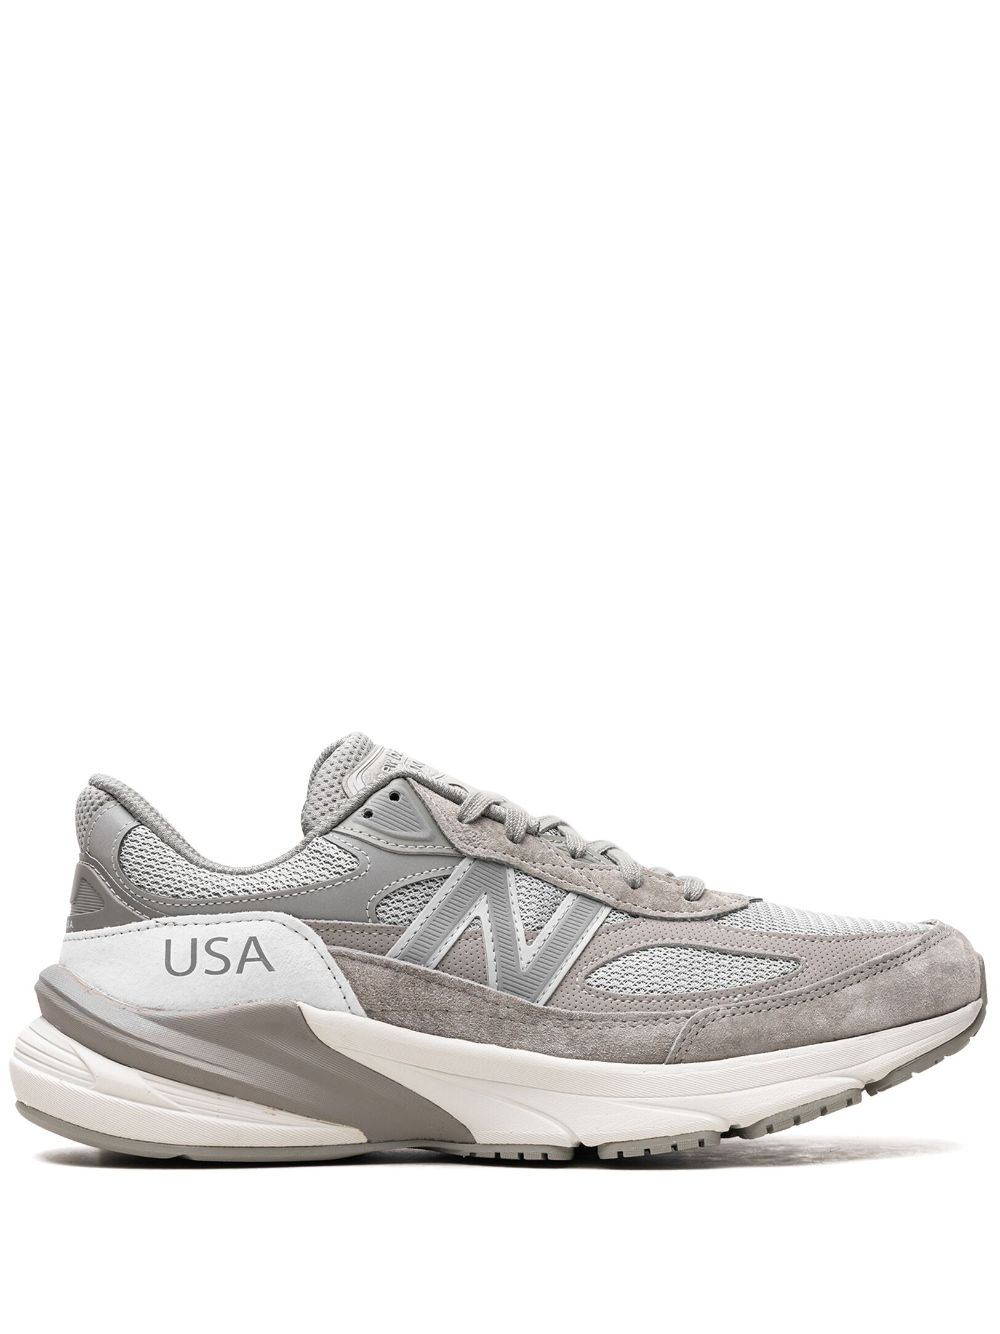 New Balance x WTAPS 990v6 sneakers - Grey